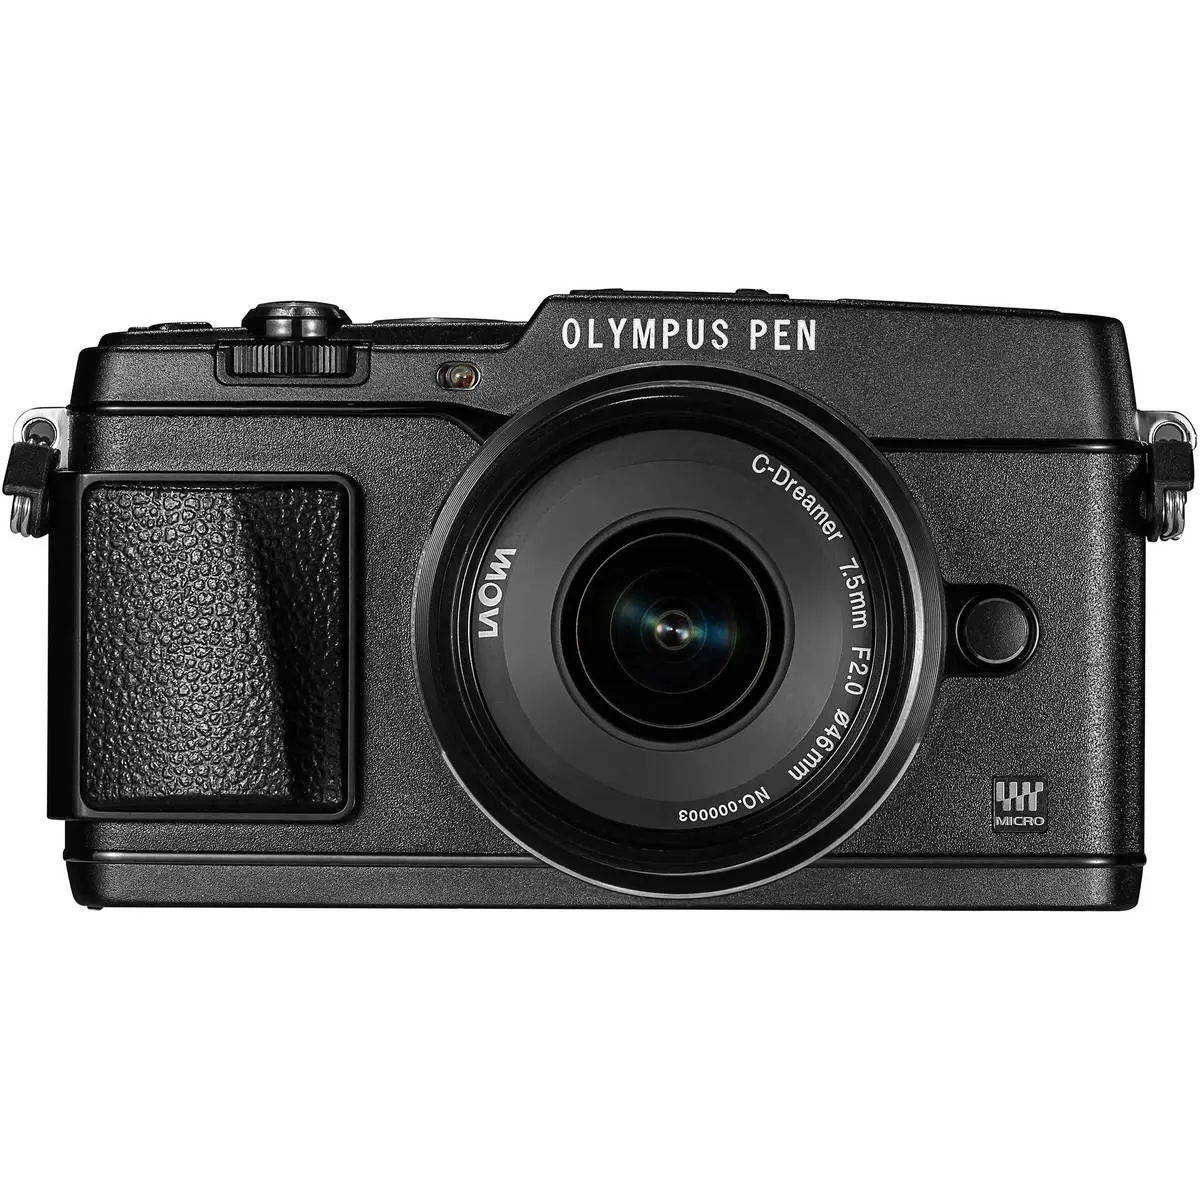 7. LAOWA Lens 7.5mm F/2 MFT Black (Lightweight Version)